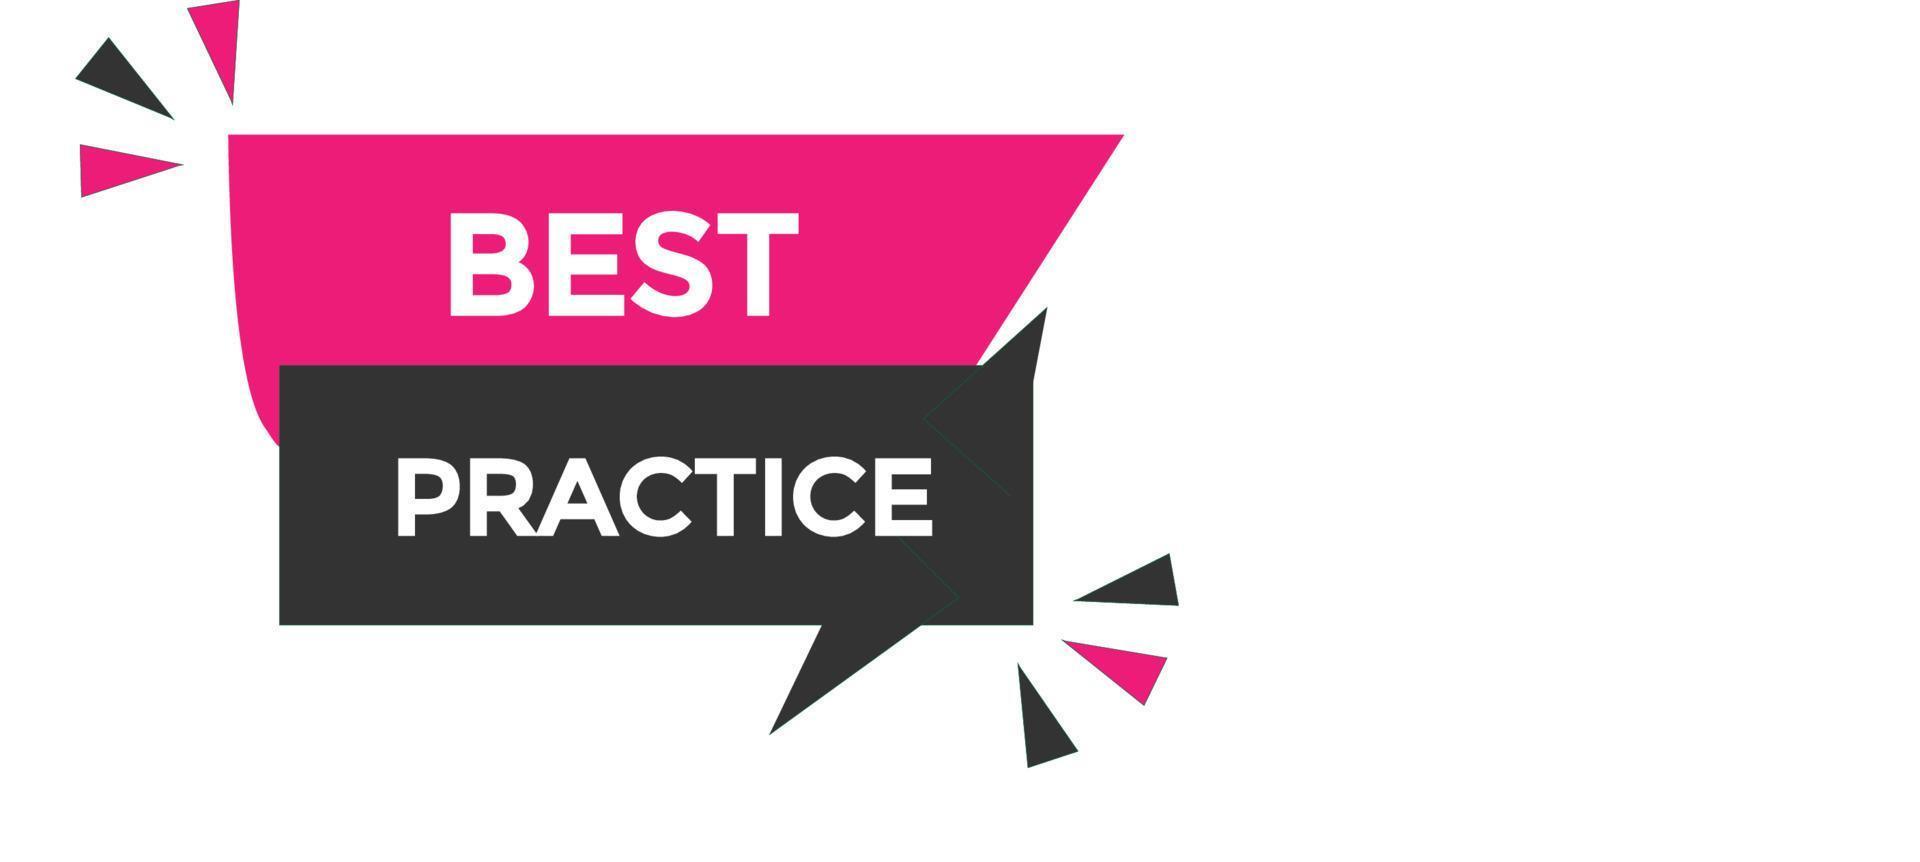 best practice button vectors.sign label speech bubble best practice vector